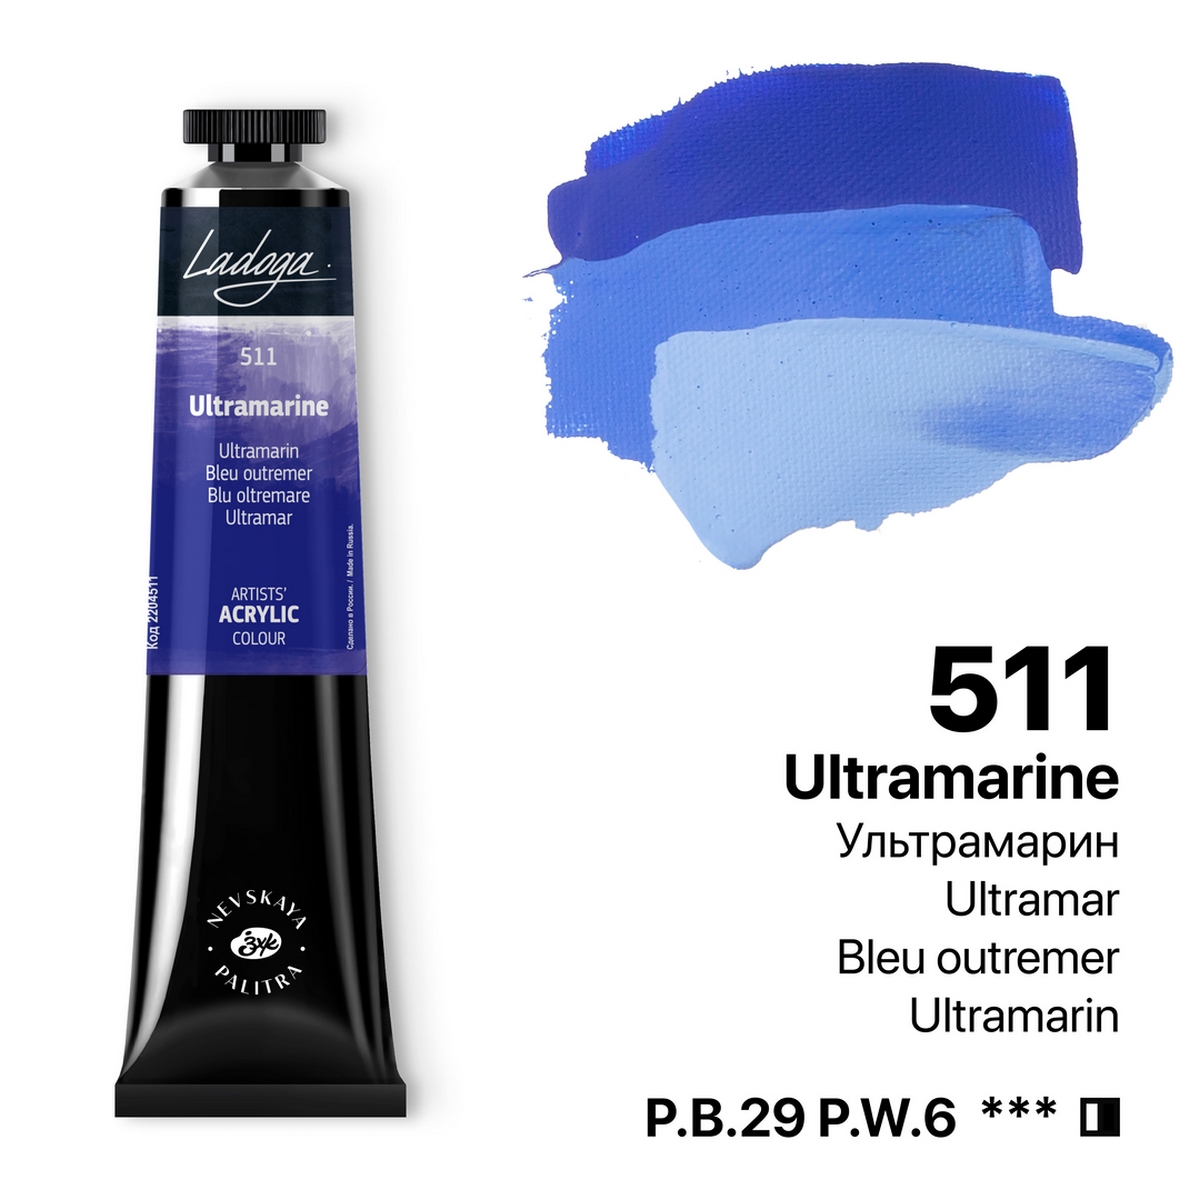 Acrylic colour Ladoga, Ultramarine, № 511